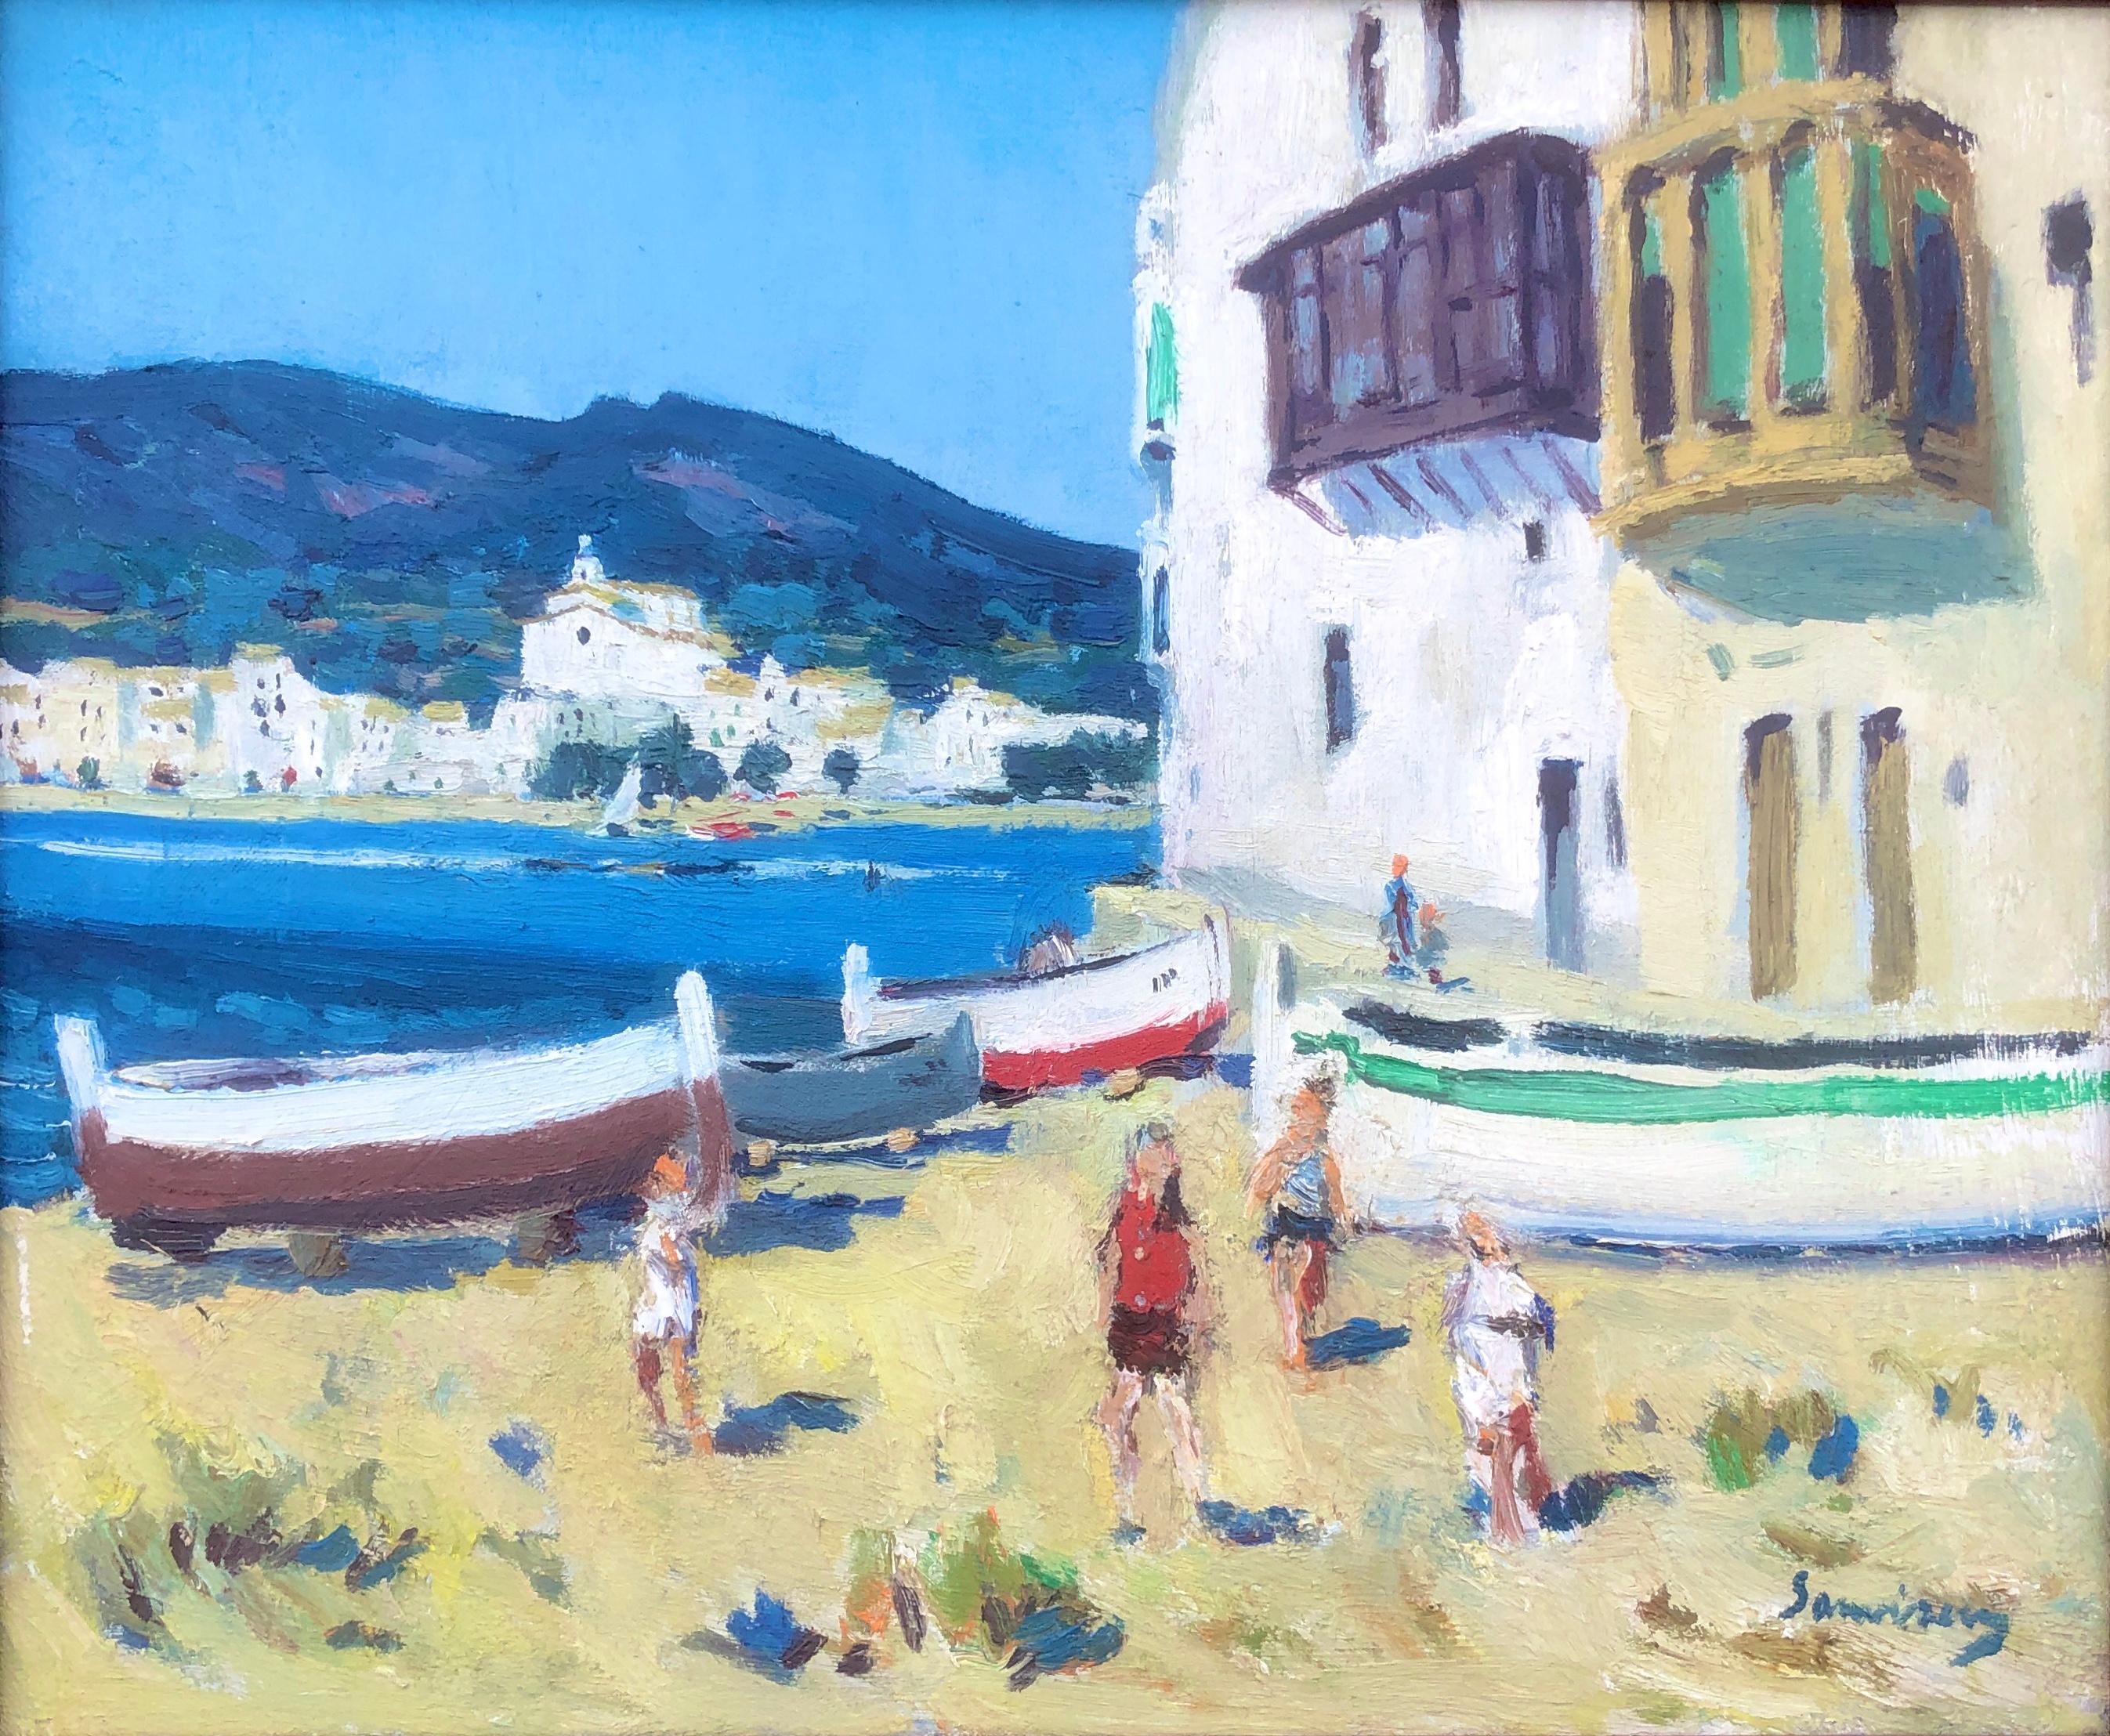 Figurative Painting Ramon Sanvisens Marfull - Cadaques Espagne huile sur toile peinture paysage marin méditerranéen espagnol